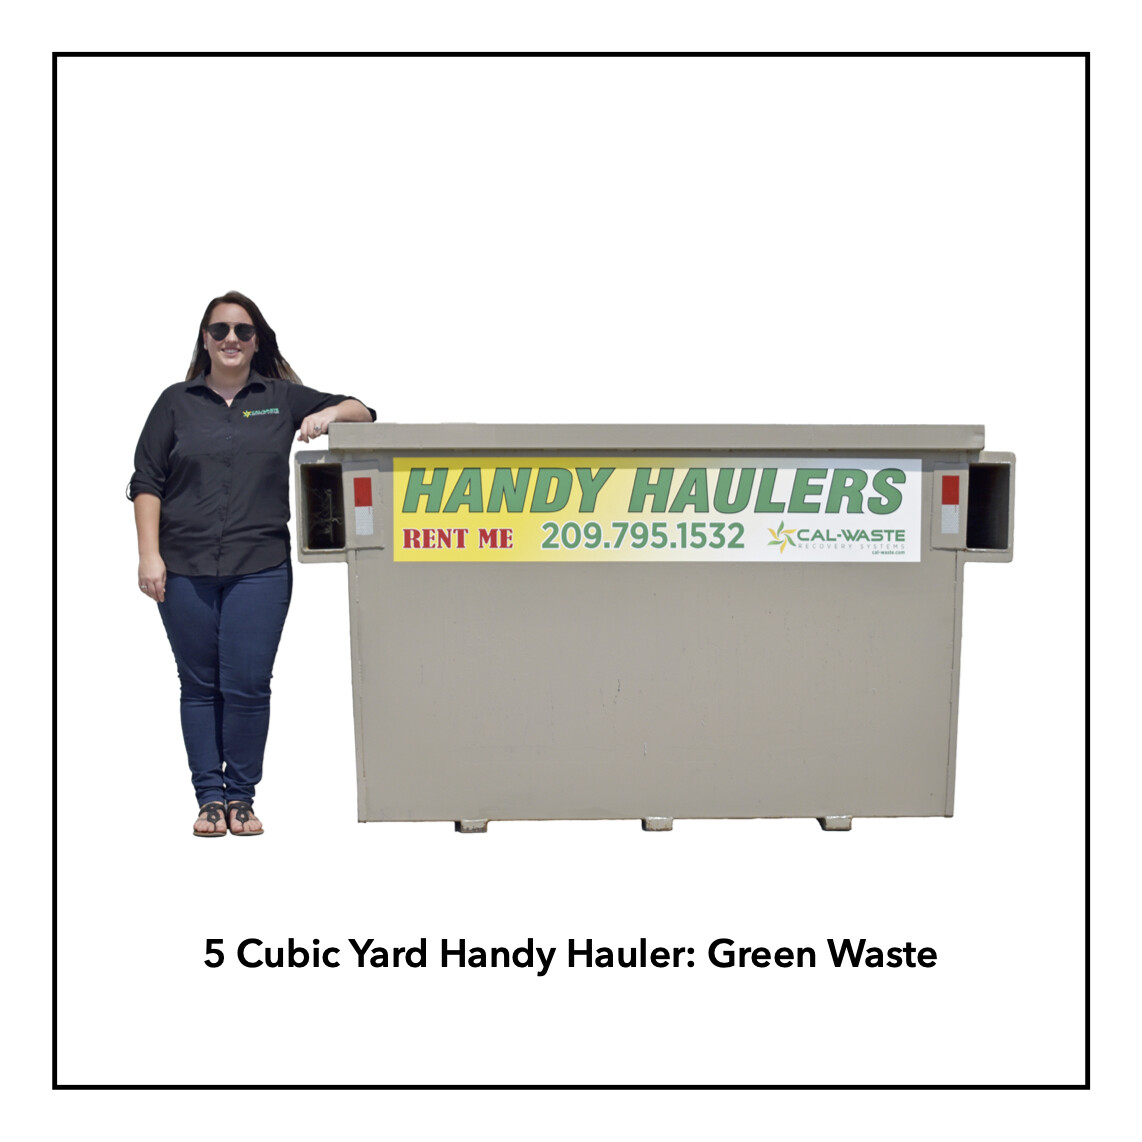 5 Cubic Yard Handy Hauler - Green Waste